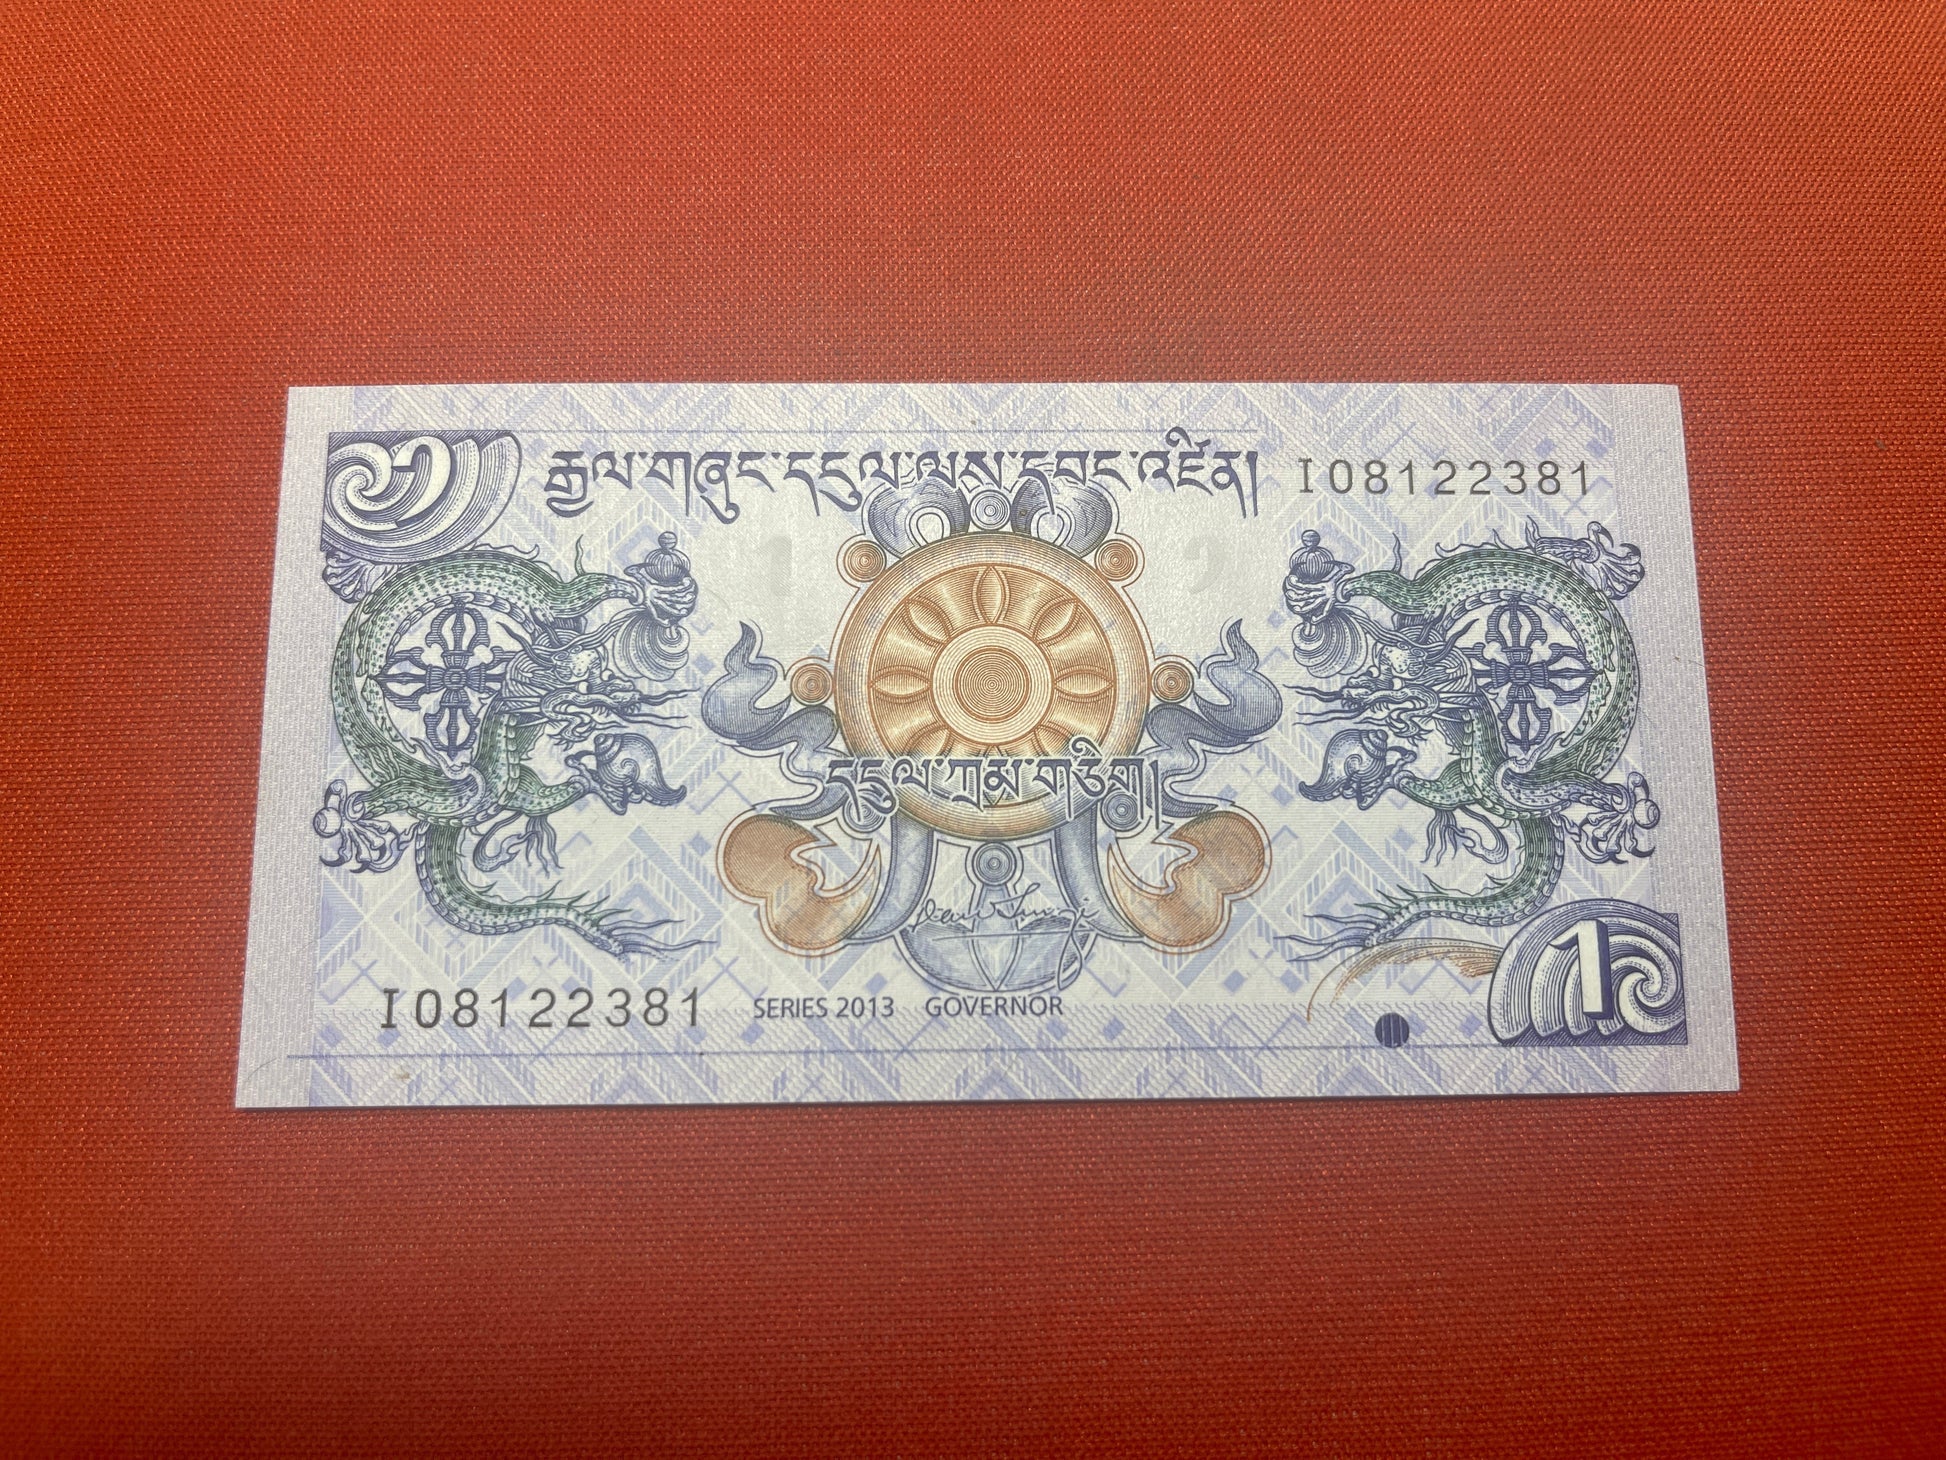  Royal Monetary Authority of Bhutan 1 Ngultrum 